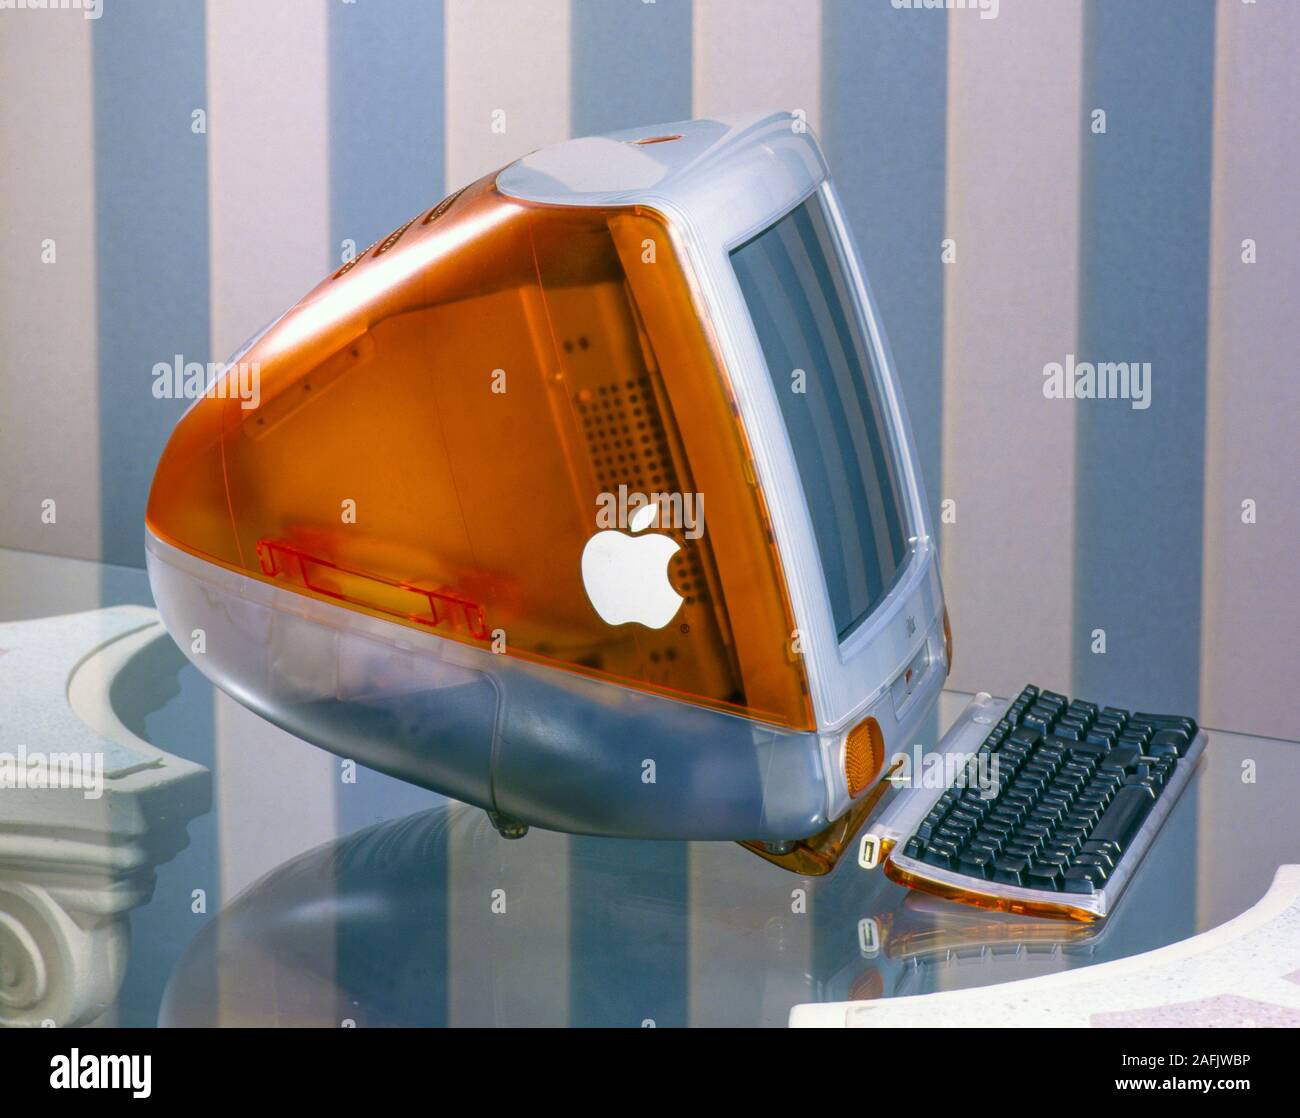 Ordenador Mac Imac G3 Tangerine 1998 Fotografía de stock - Alamy